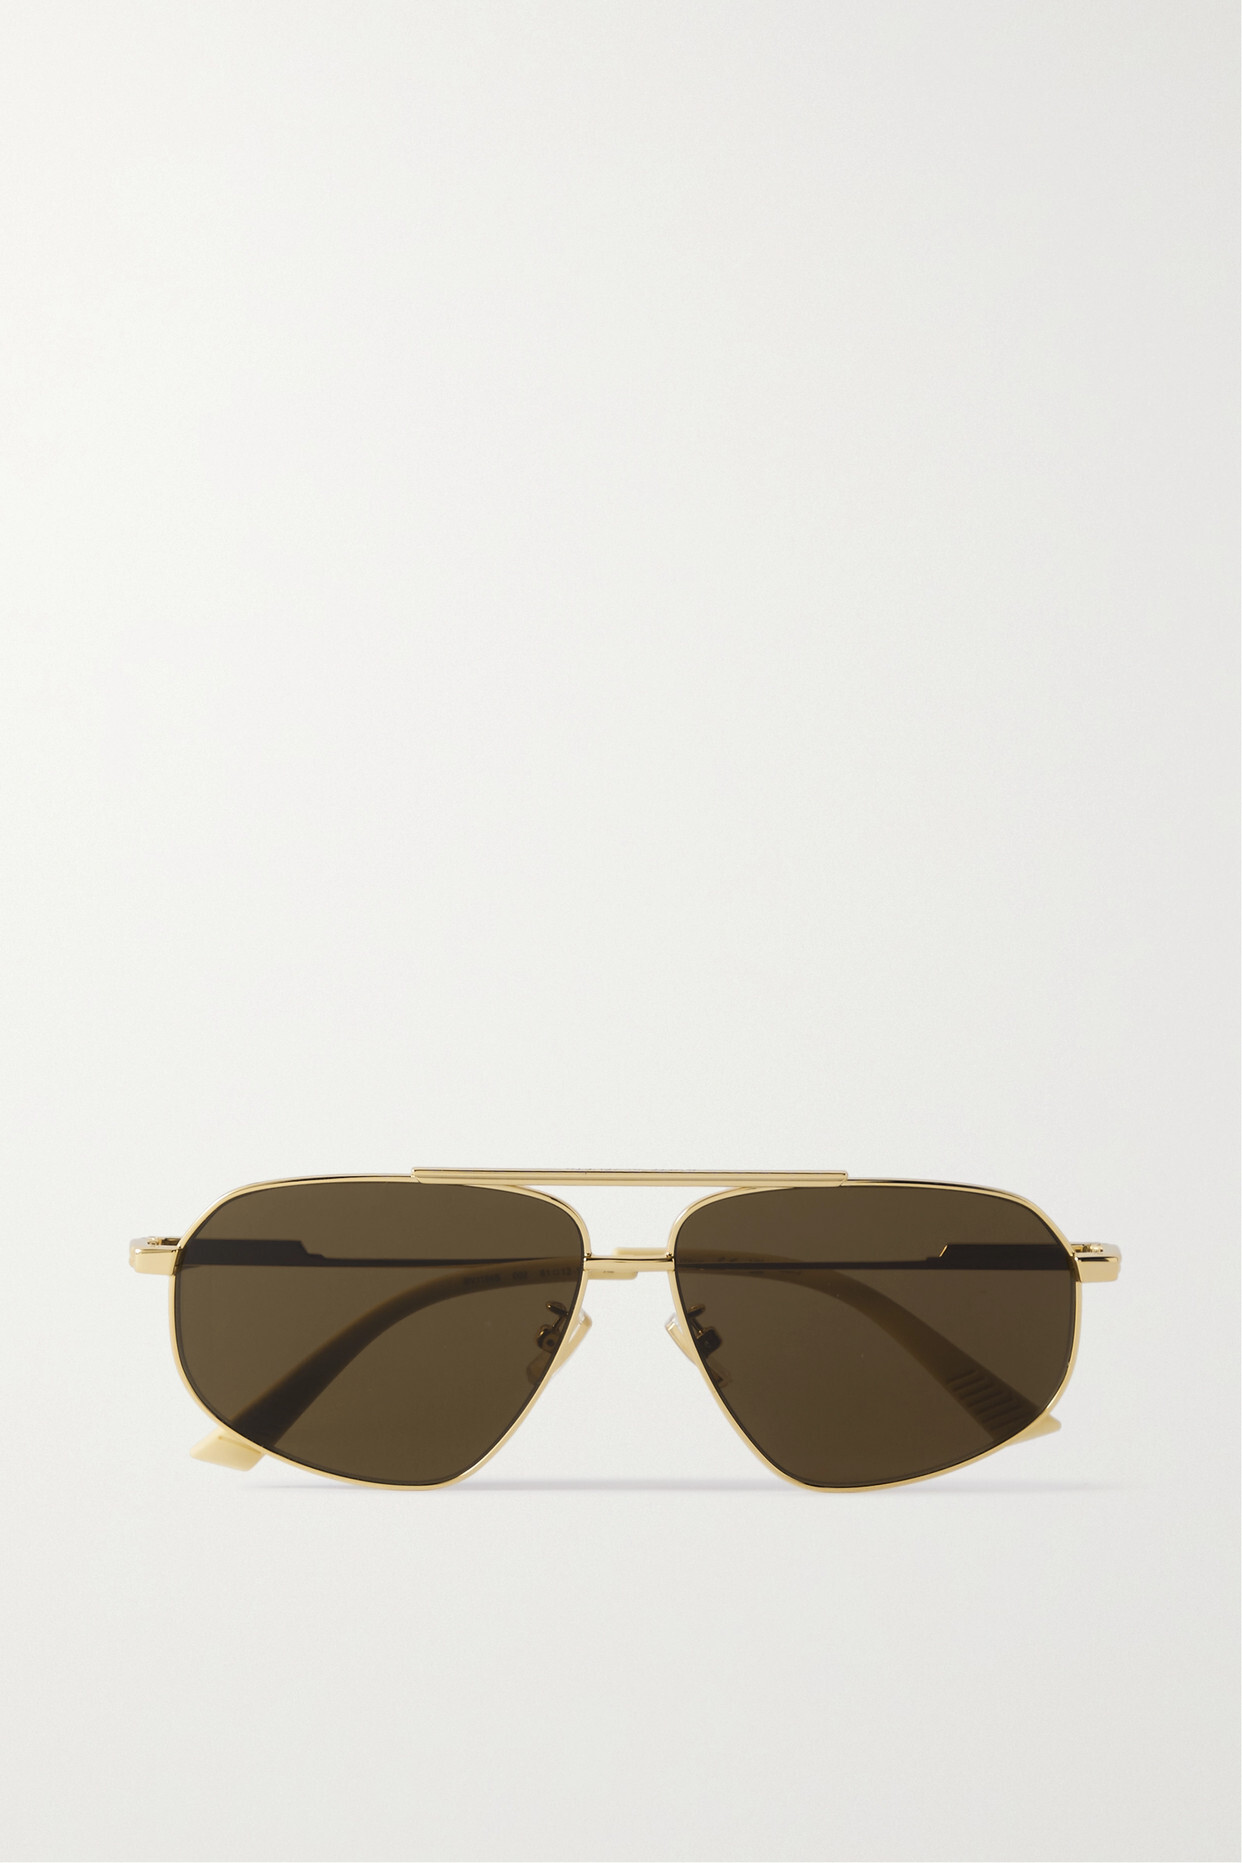 Bottega Veneta Eyewear - Aviator-style Gold-tone Sunglasses - one size